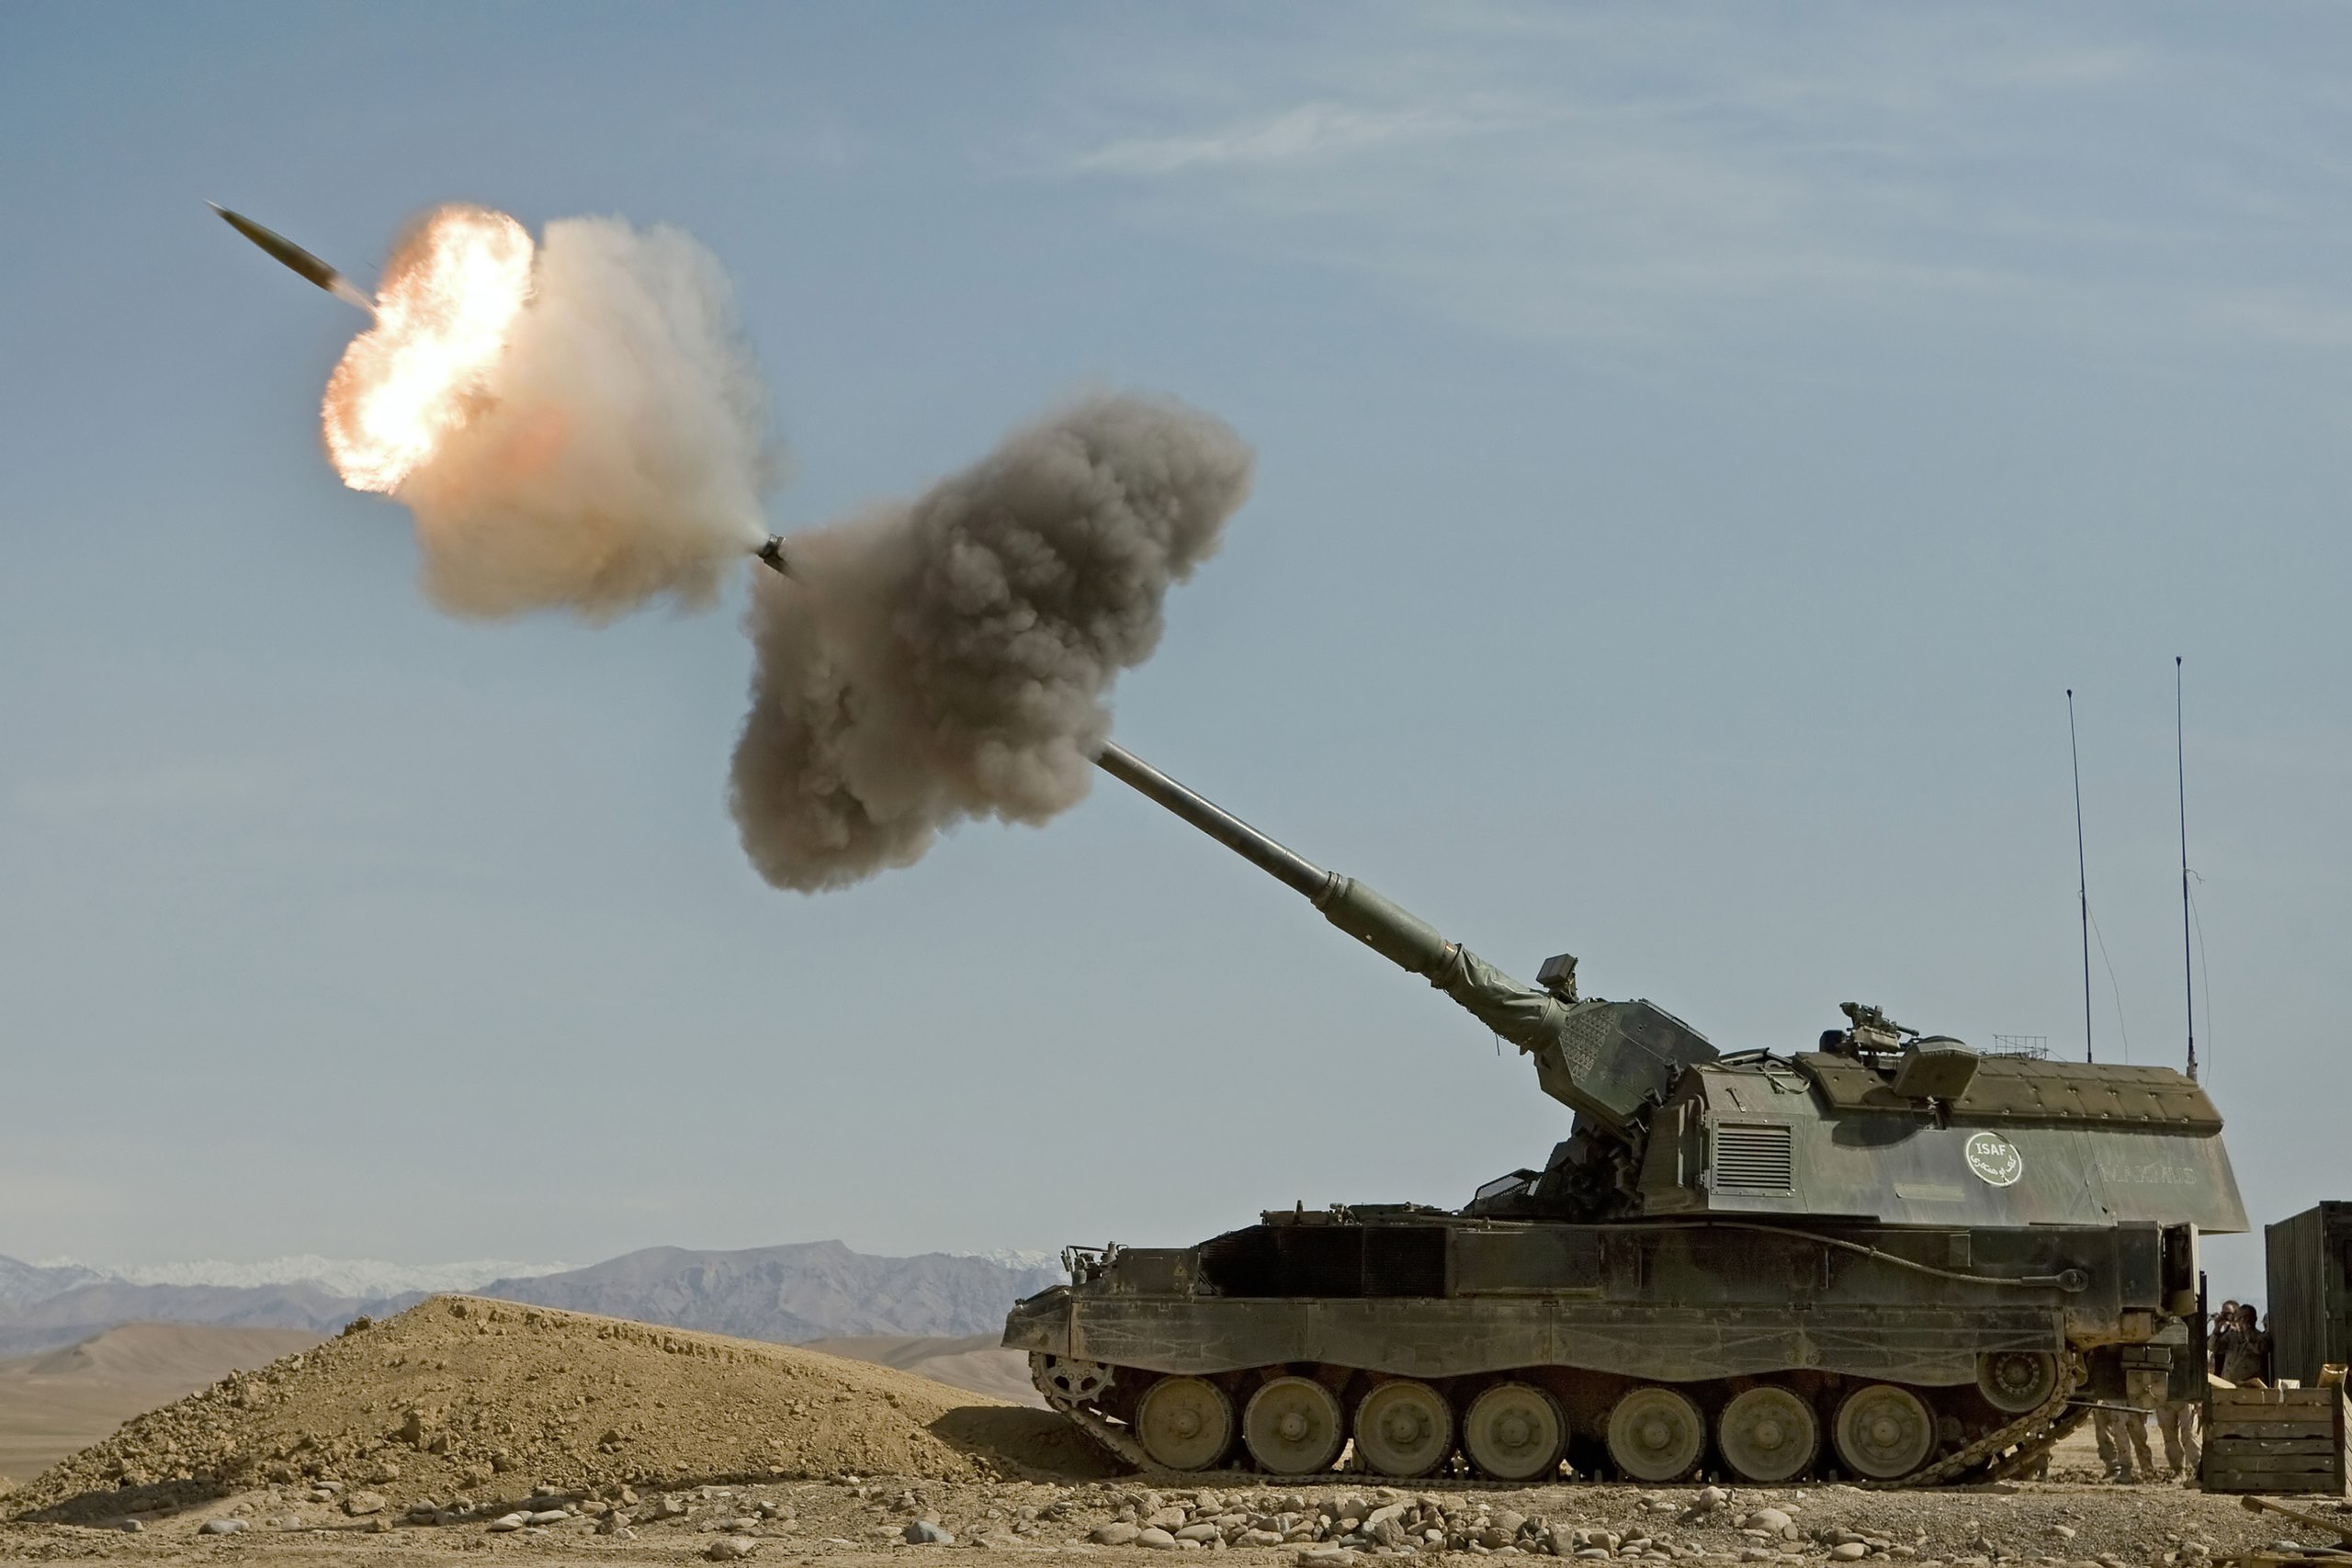 2560px-Dutch_Panzerhaubitz_fires_in_Afghanistan.jpg